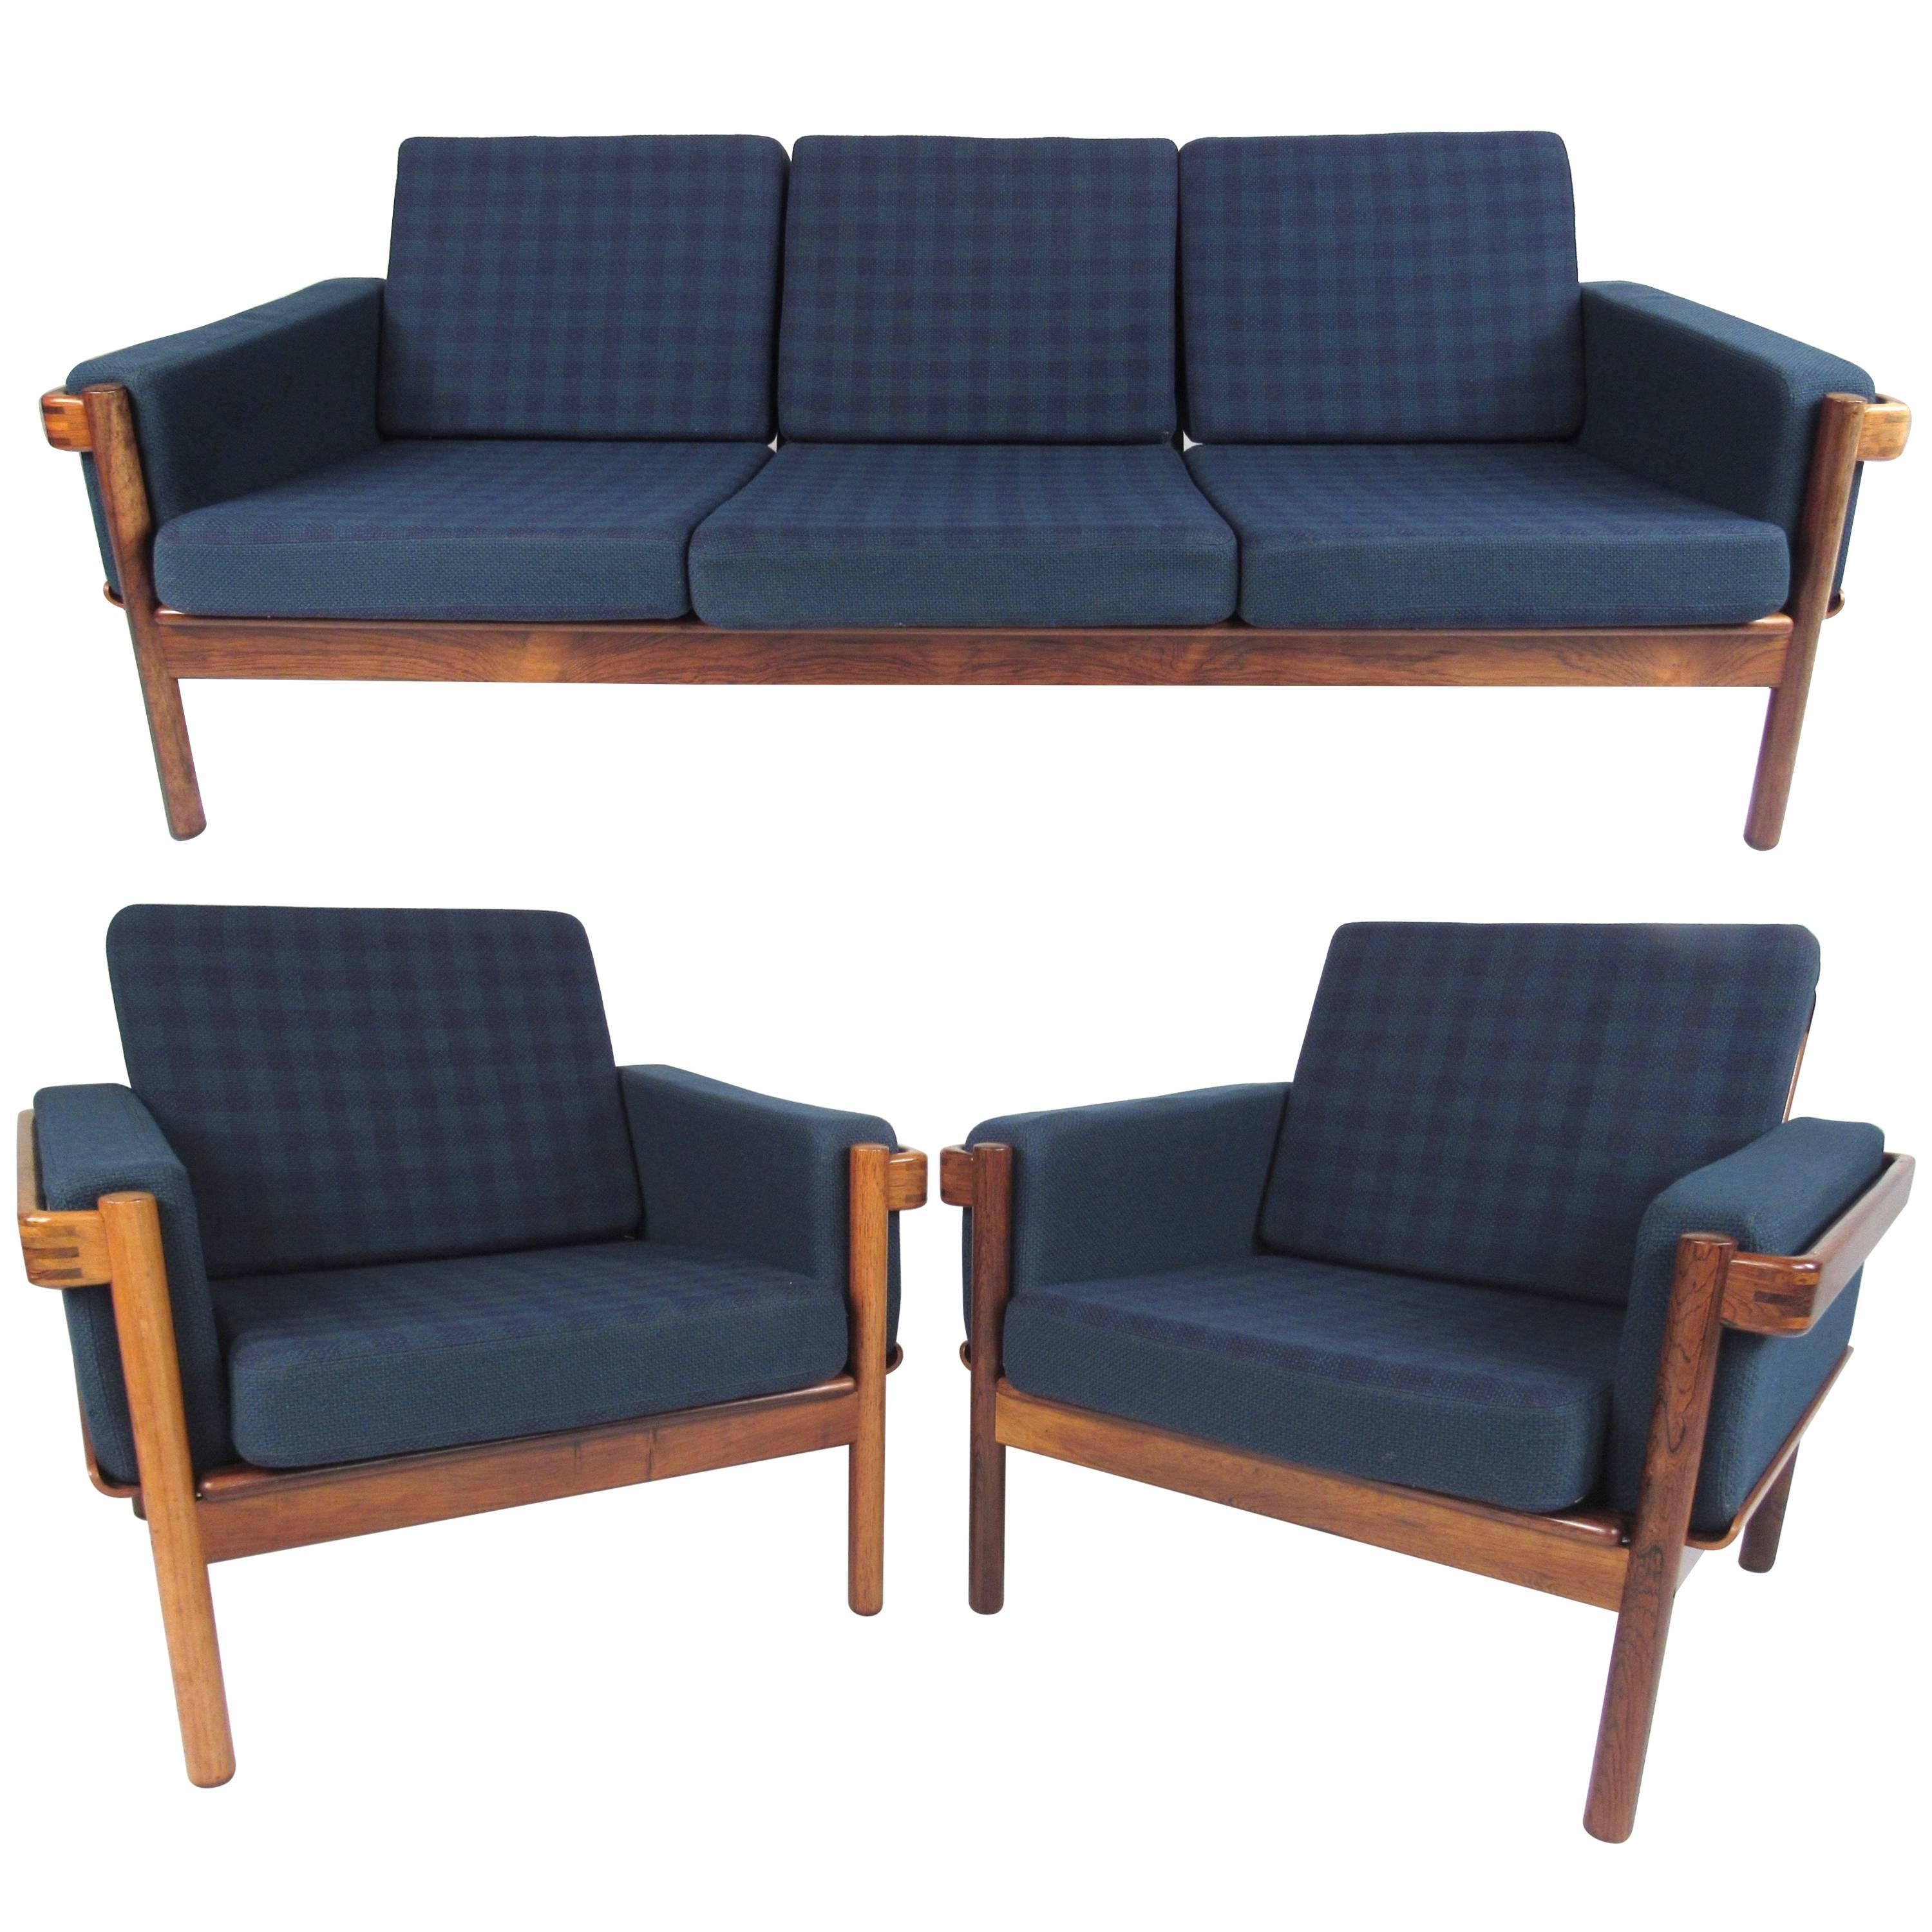 Scandinavian Modern Living Room Set With Sofa and Chairs